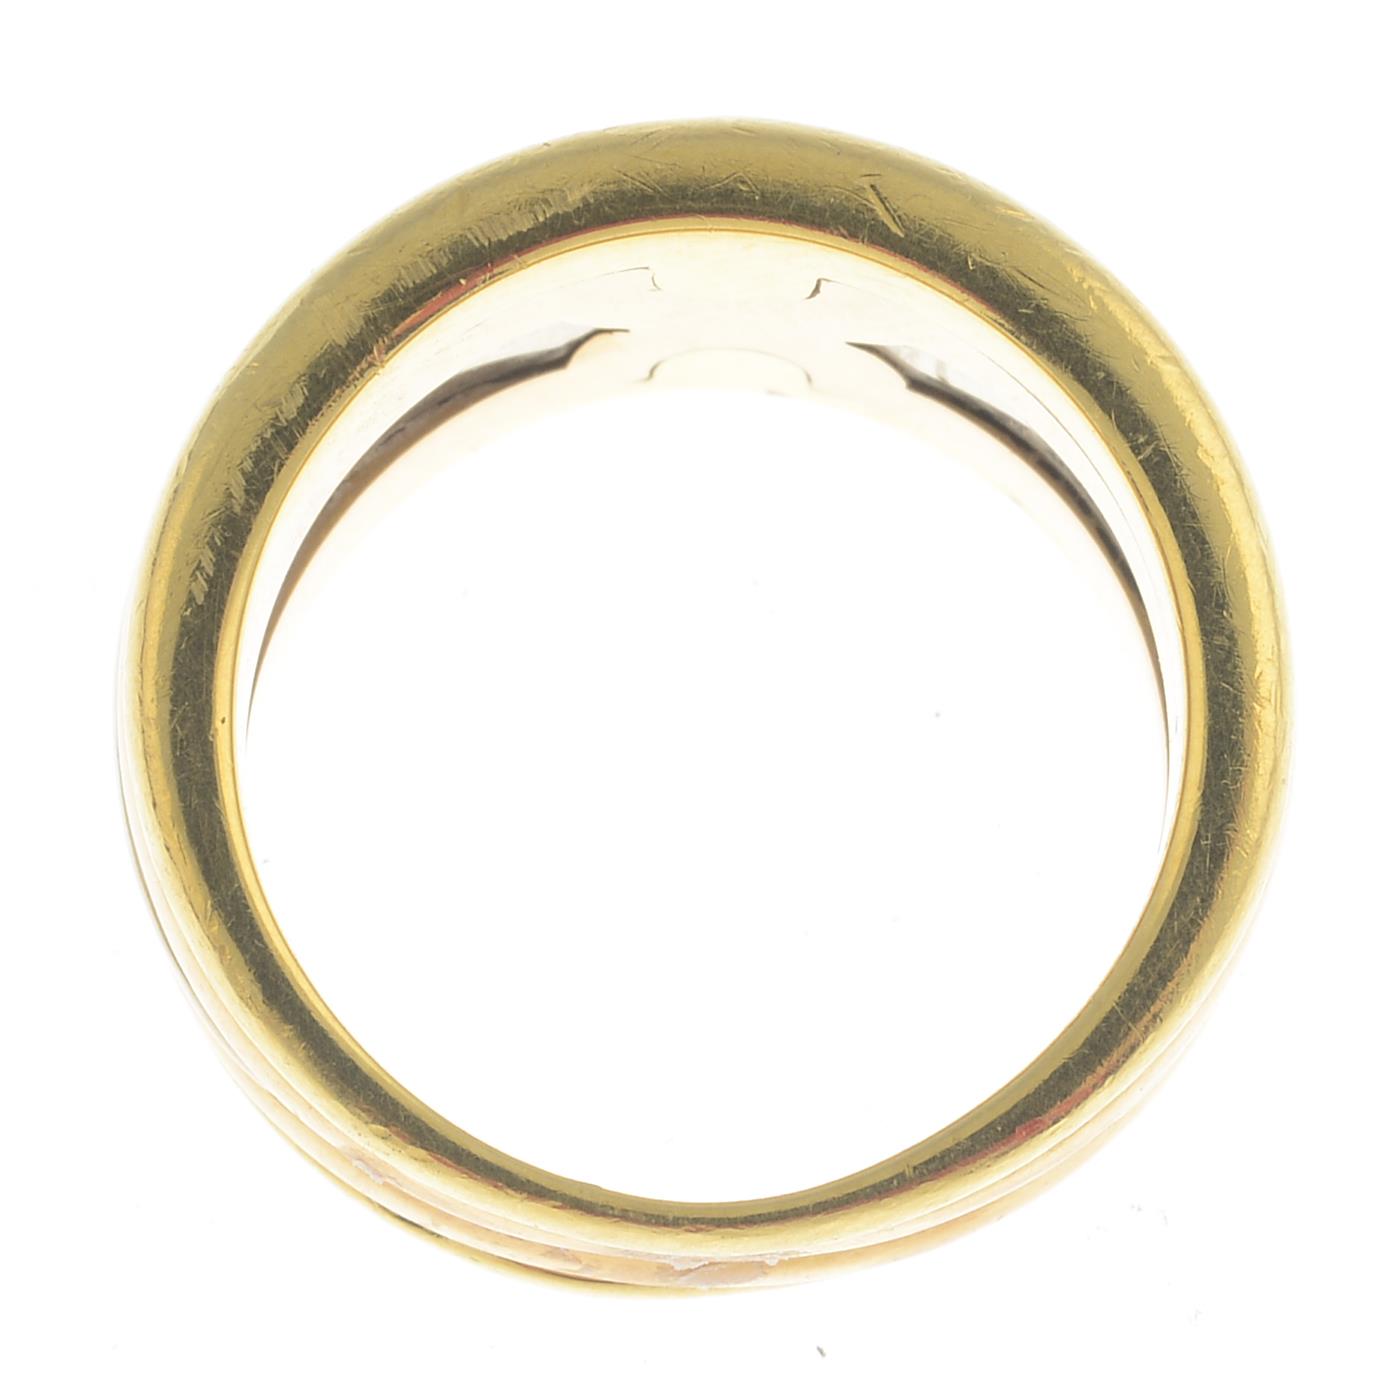 BULGARI - an 18ct gold band ring. - Image 3 of 3